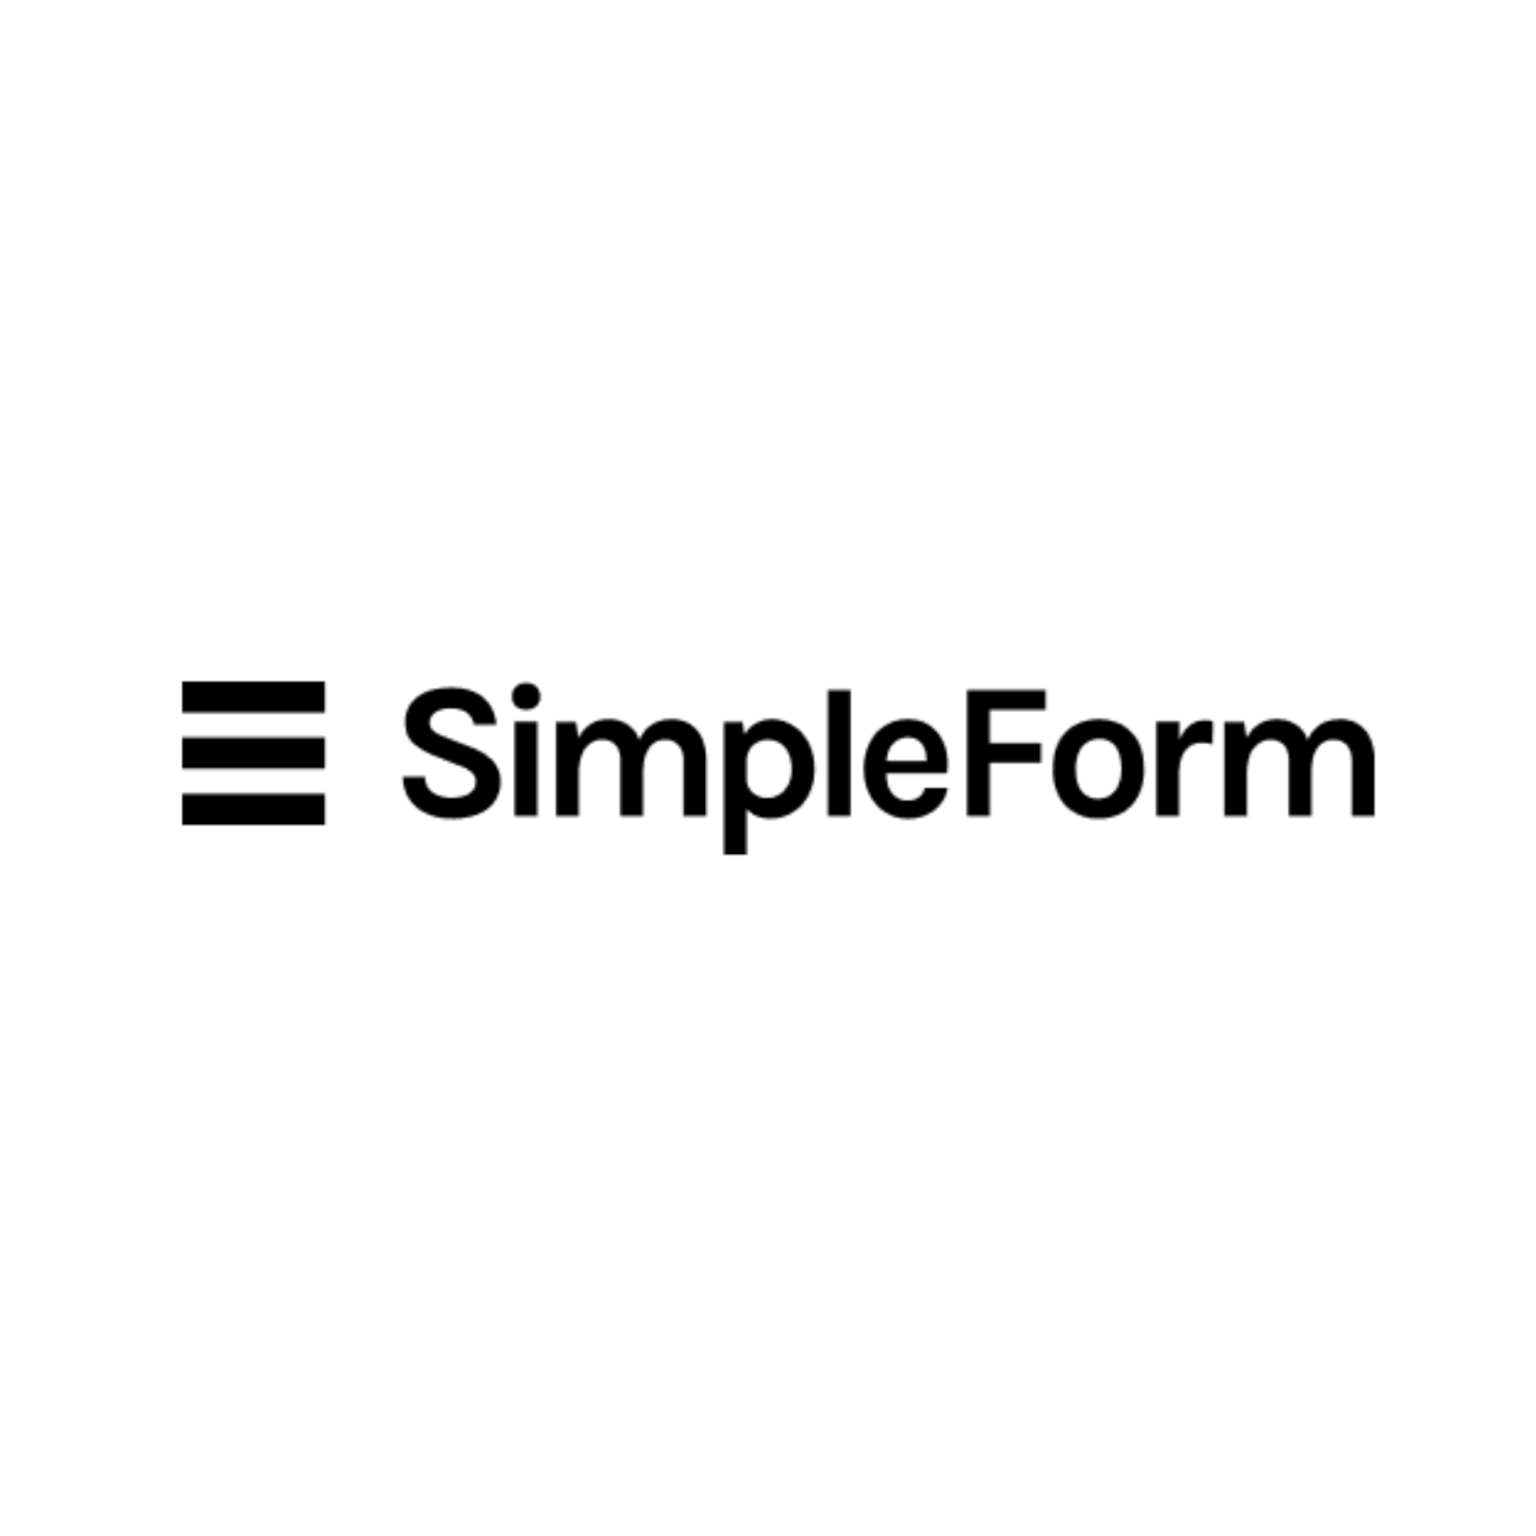 SimpleForm